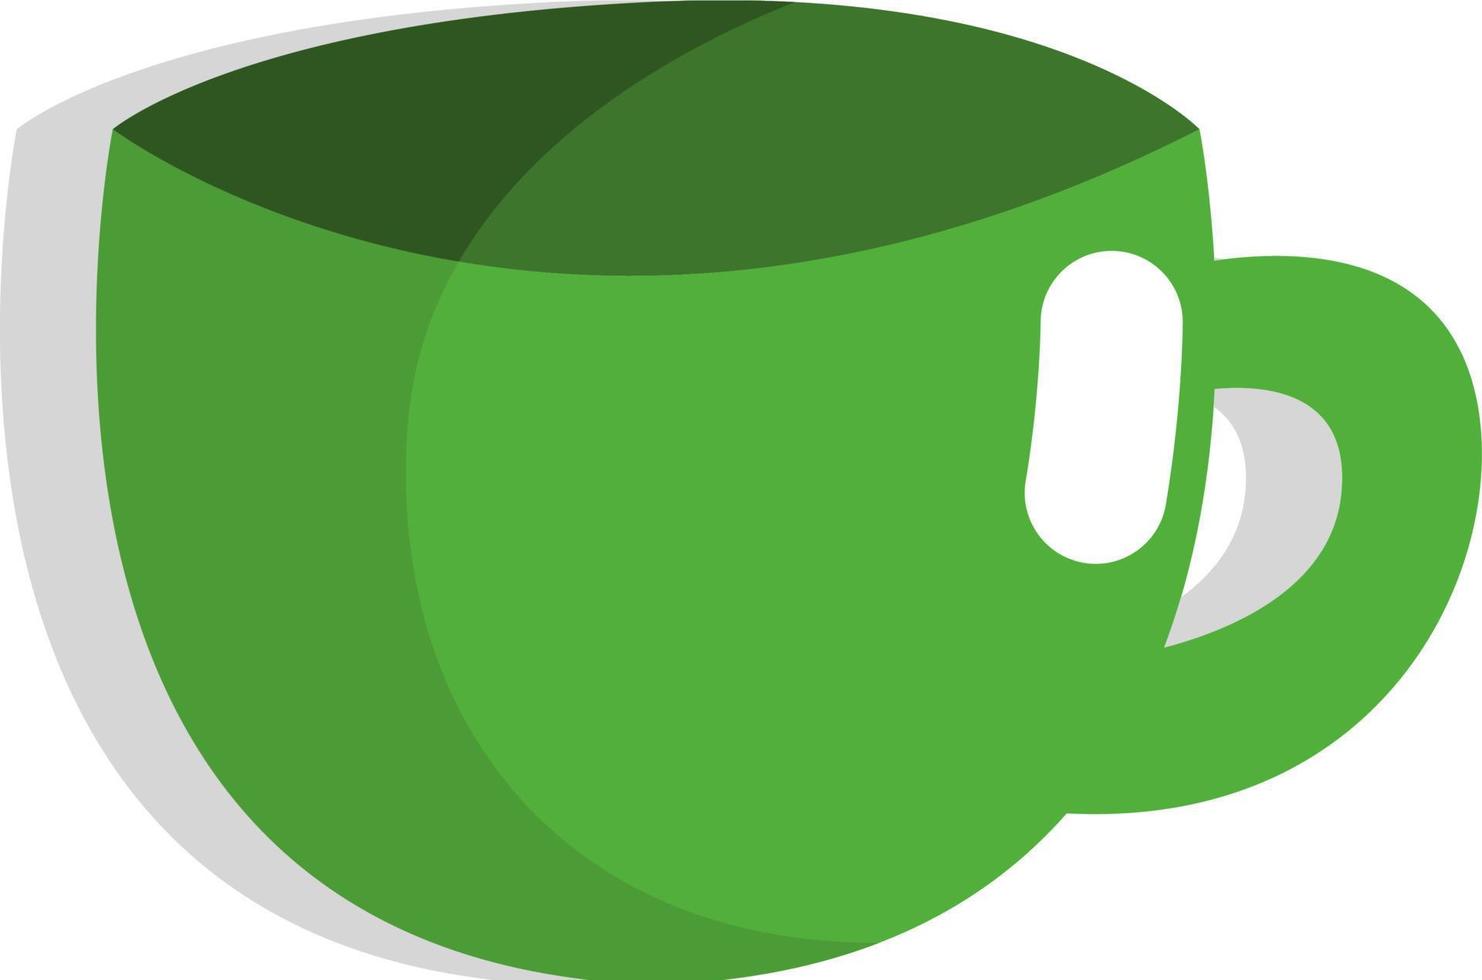 xícara de chá verde, ícone, vetor sobre fundo branco.